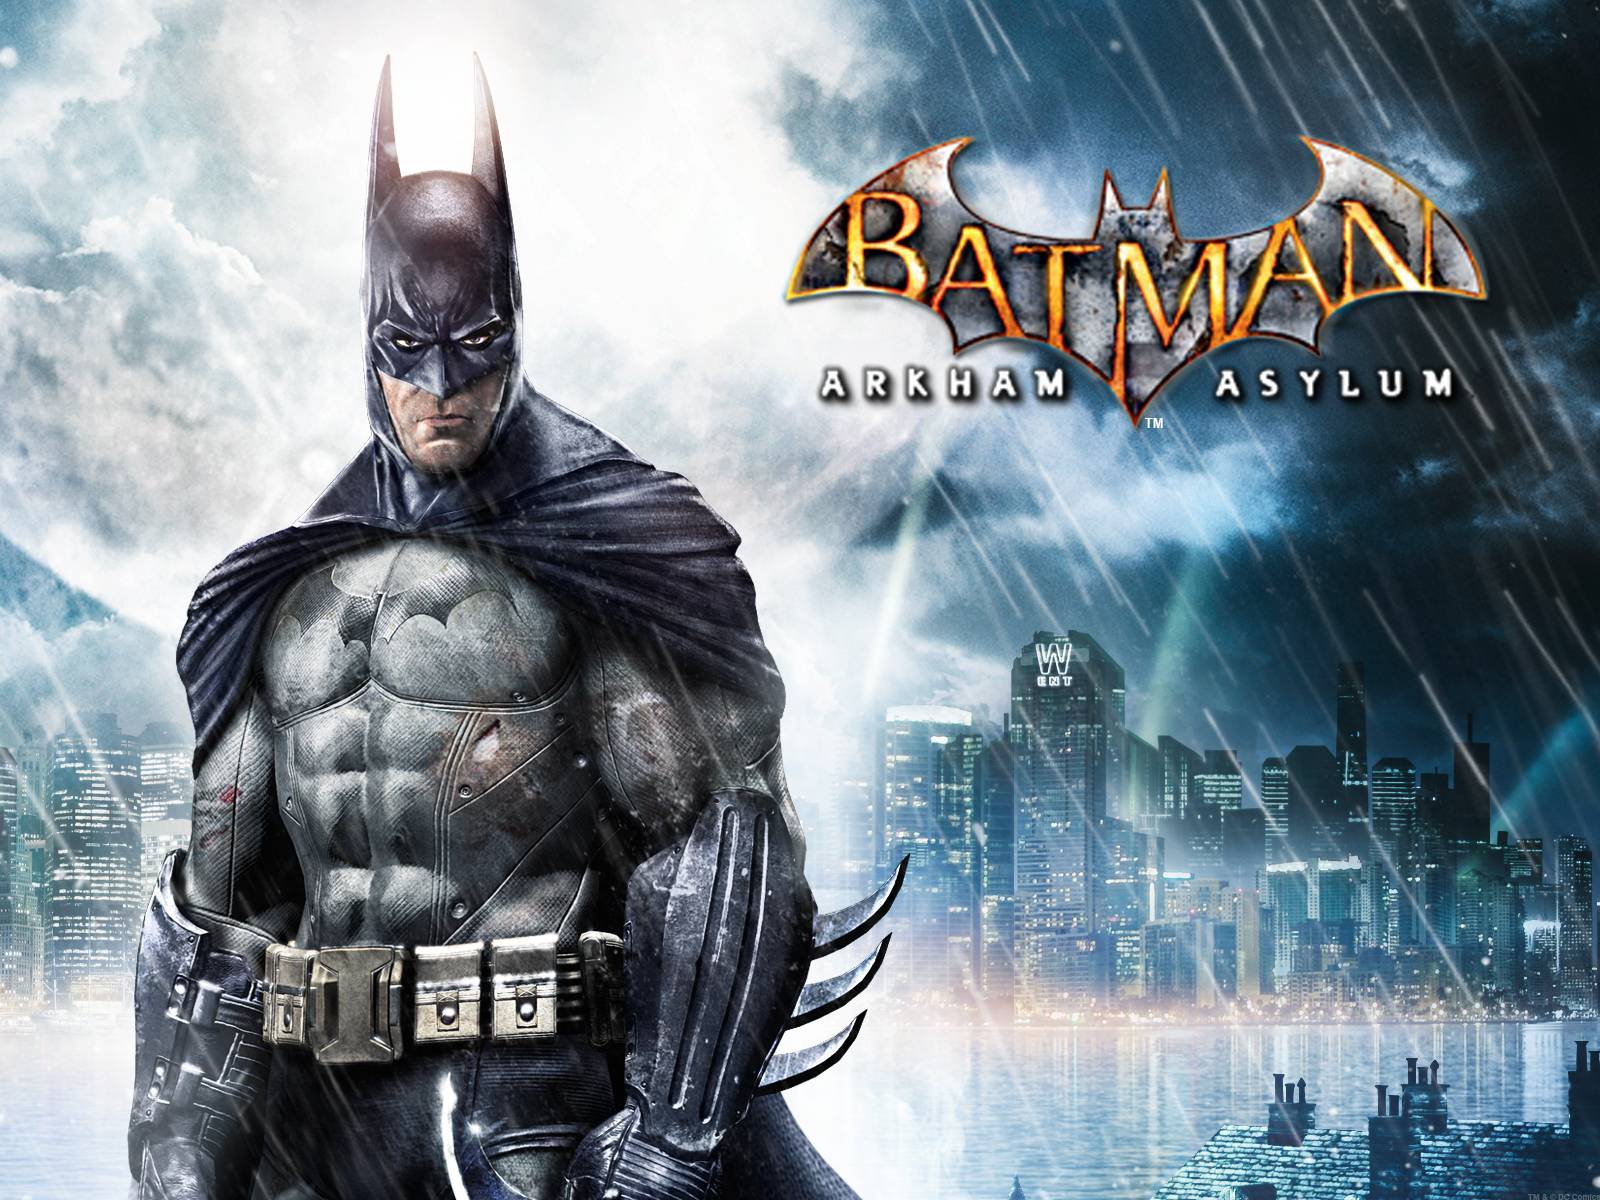 Batman Arkham Asylum is the mother of superhero games 